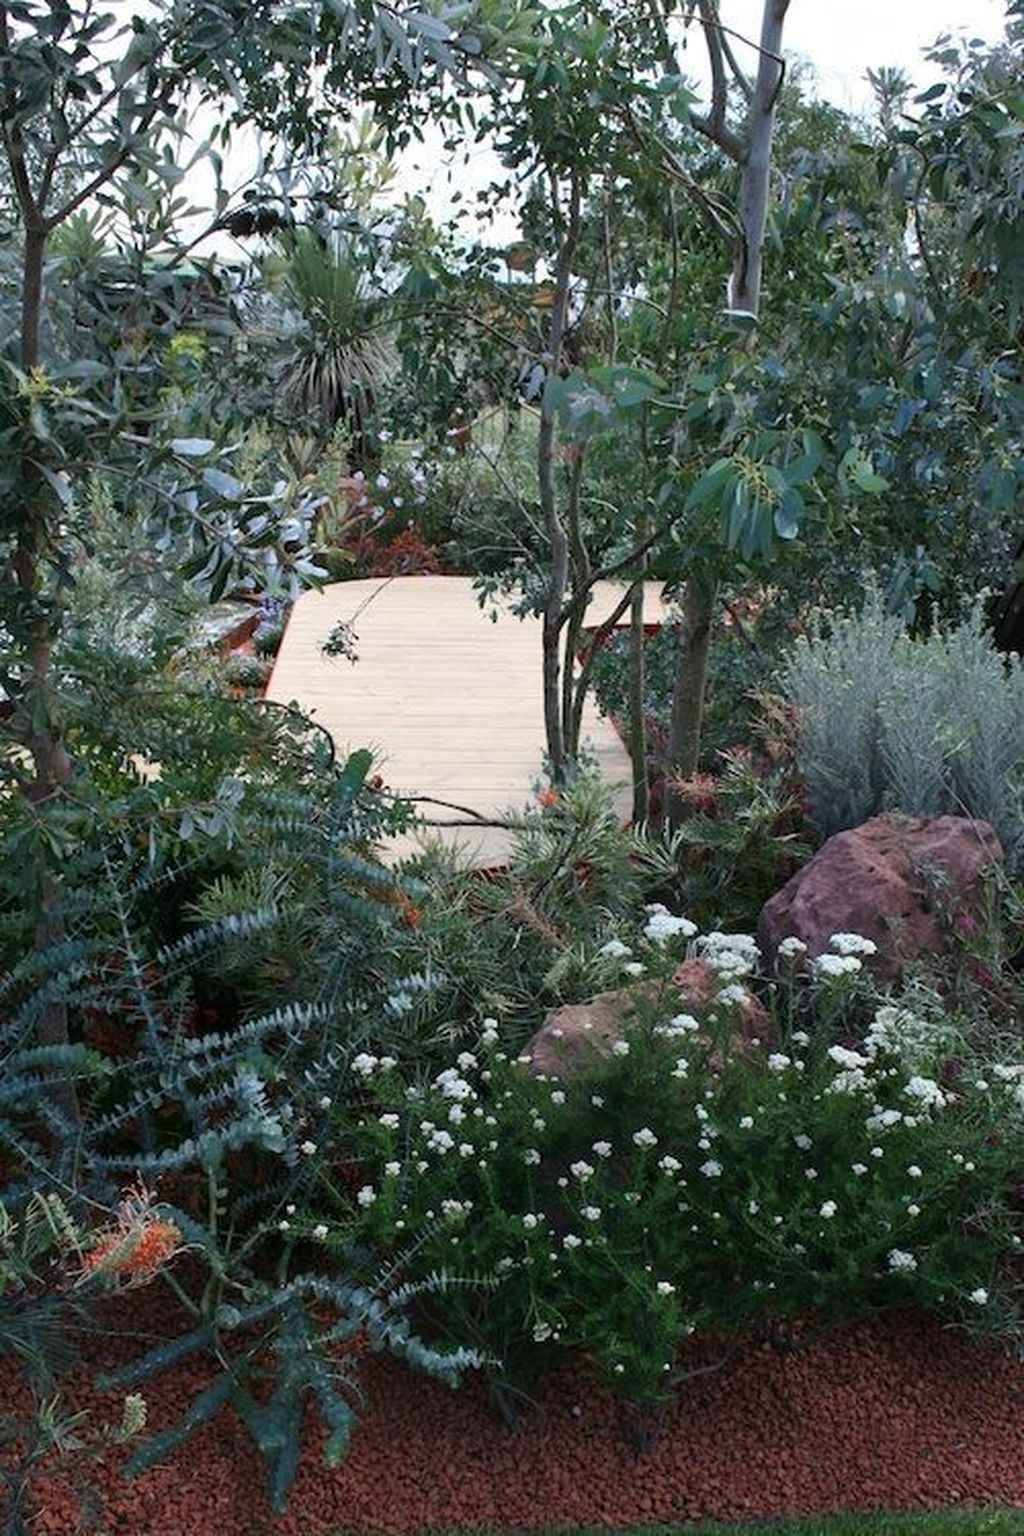 Native Australian Garden Design Ideas